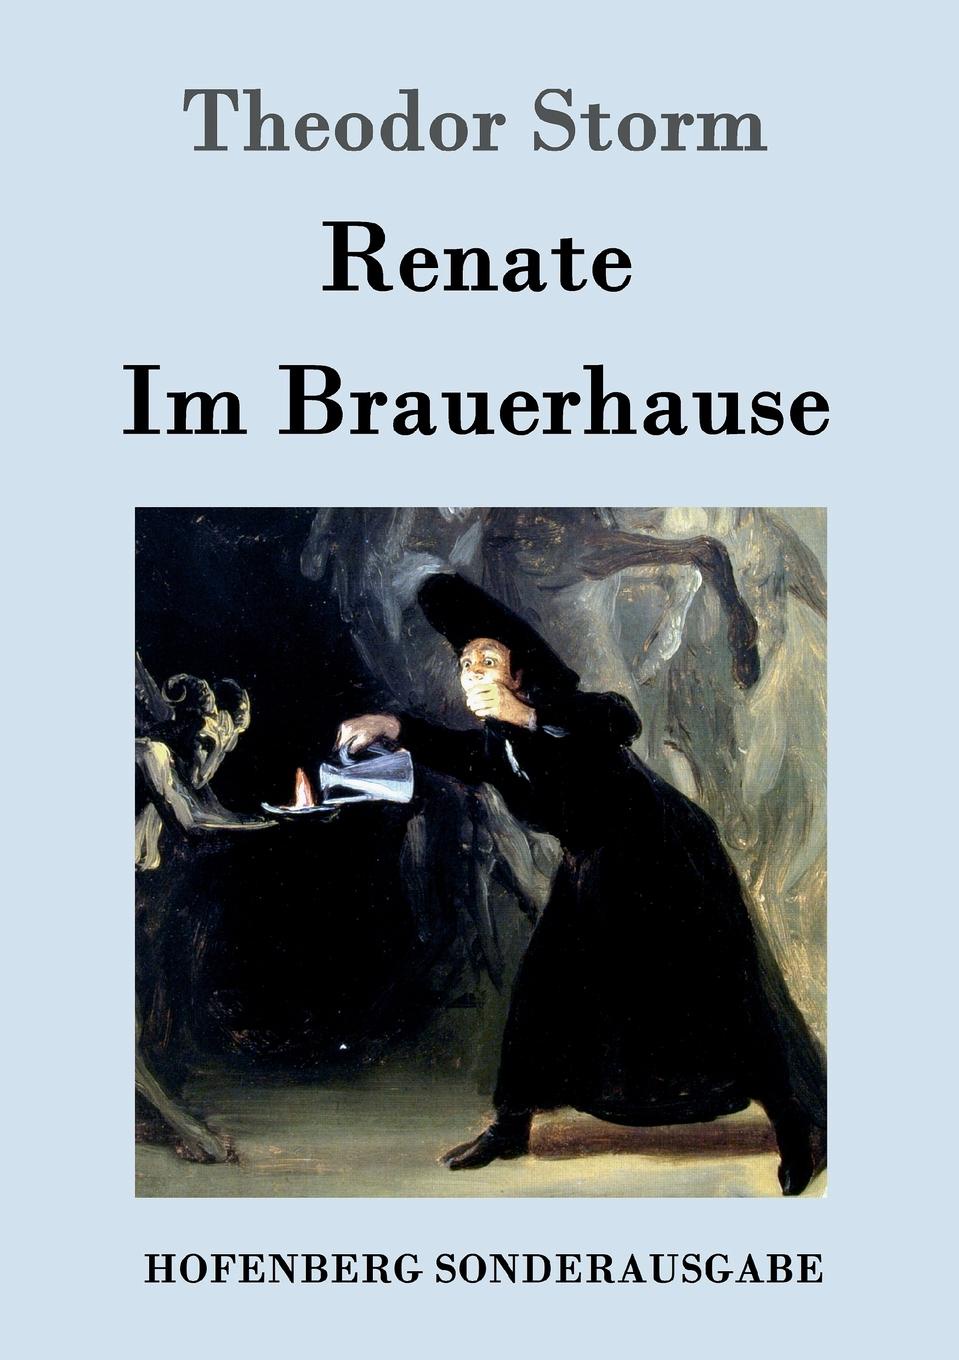 Theodor Storm Renate / Im Brauerhause